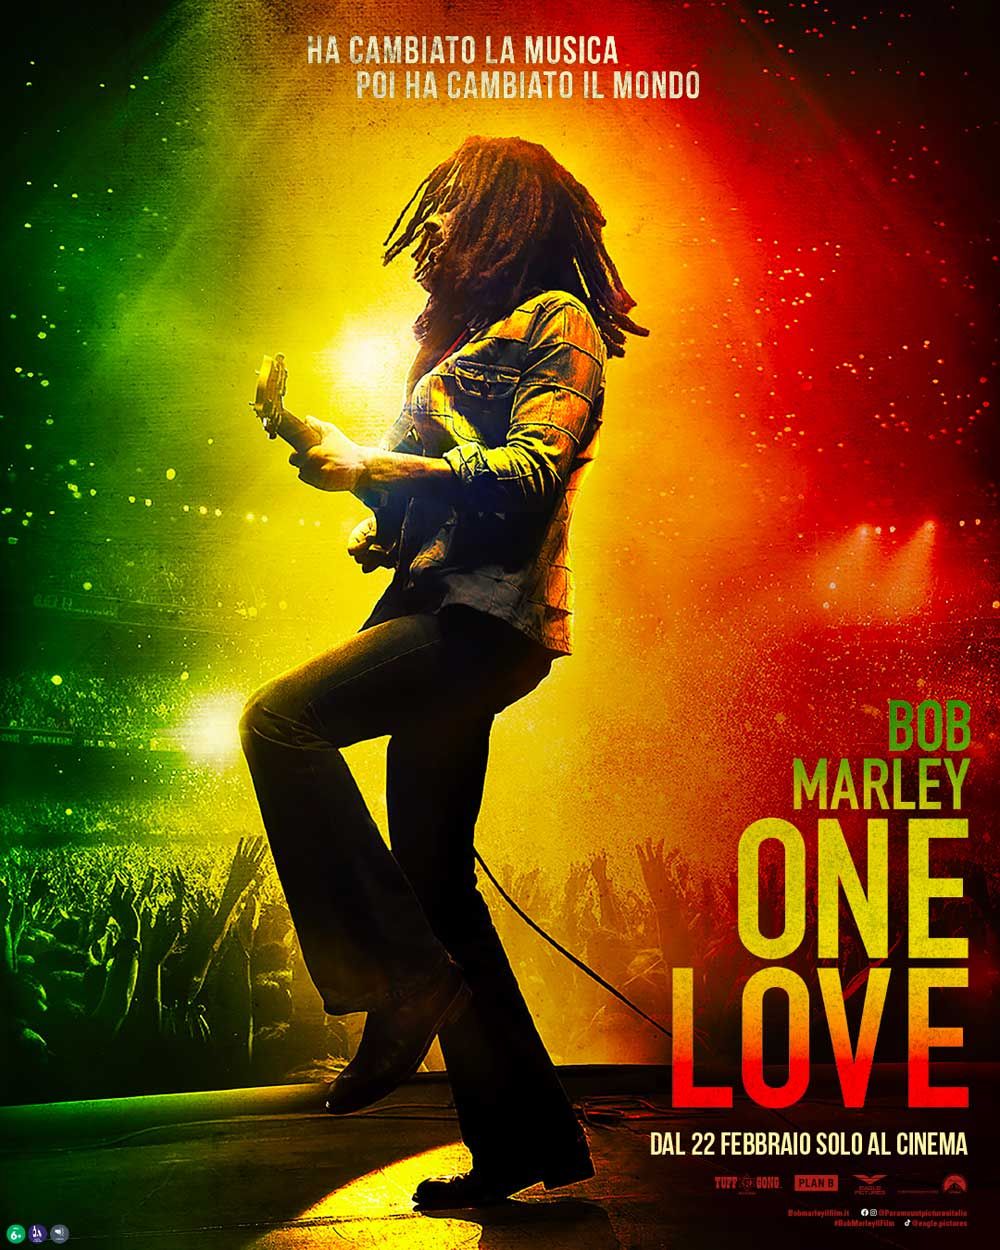 bob marley-one love